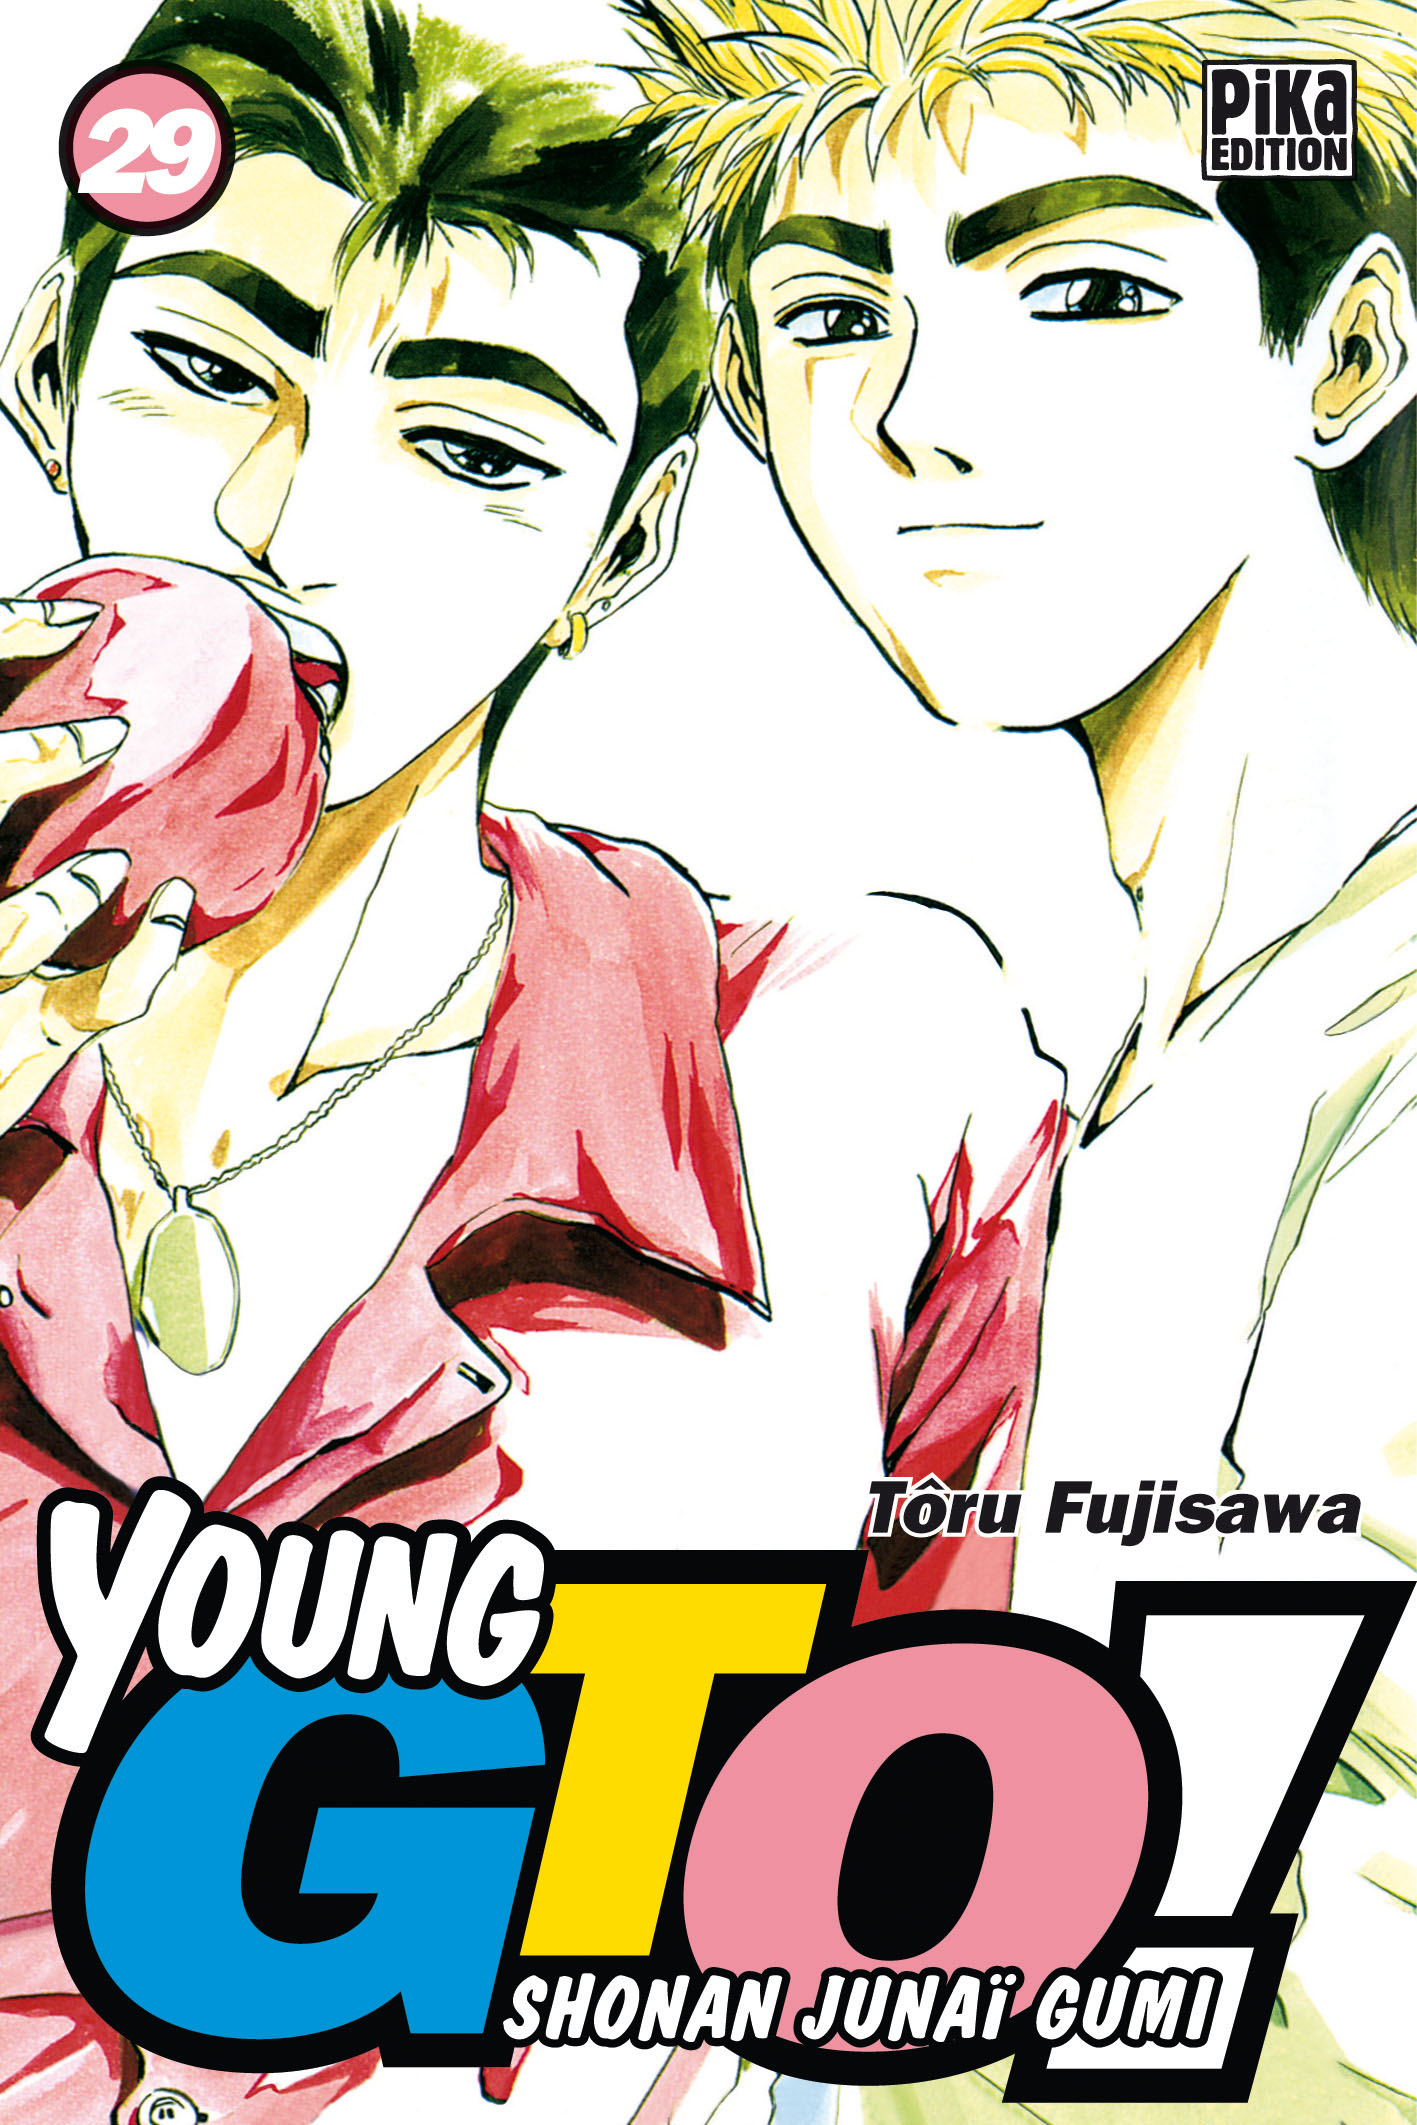 Young GTO - Shonan Junaï Gumi Vol.29